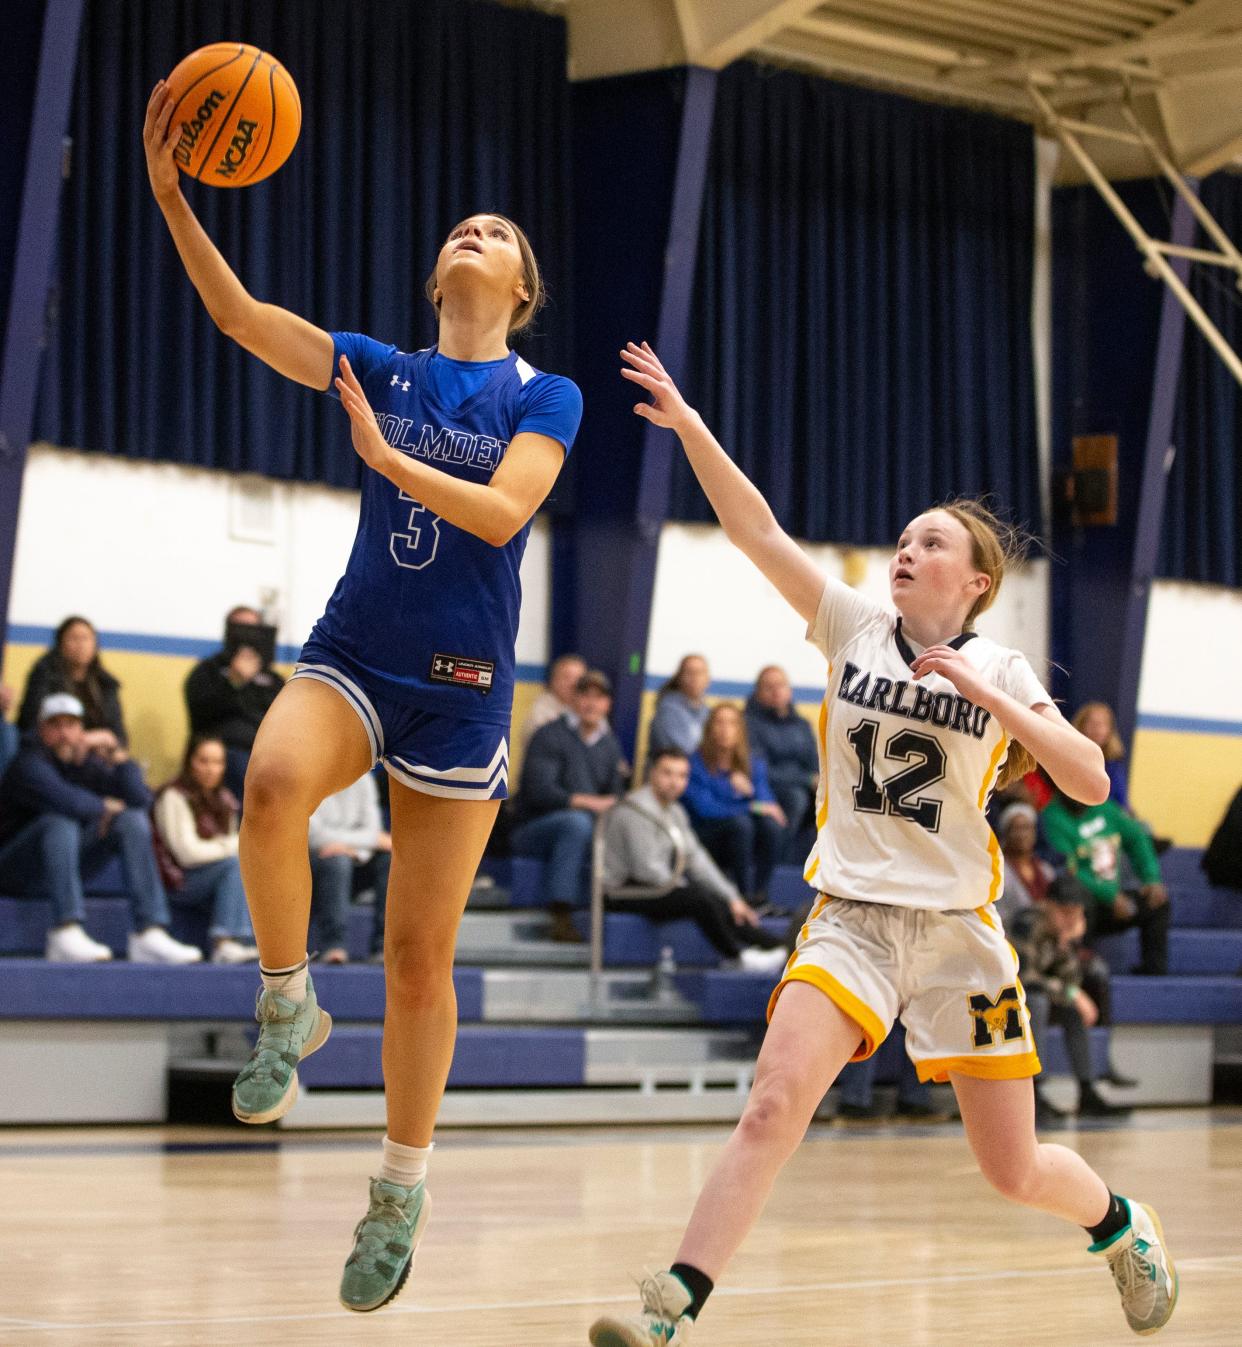 Holmdel’s #3 Allison Cannon drives to the hoop. Marlboro vs Holmdel girls basketball at St. Mary’s. 
Middletown, NJ
Friday, December 15, 2023